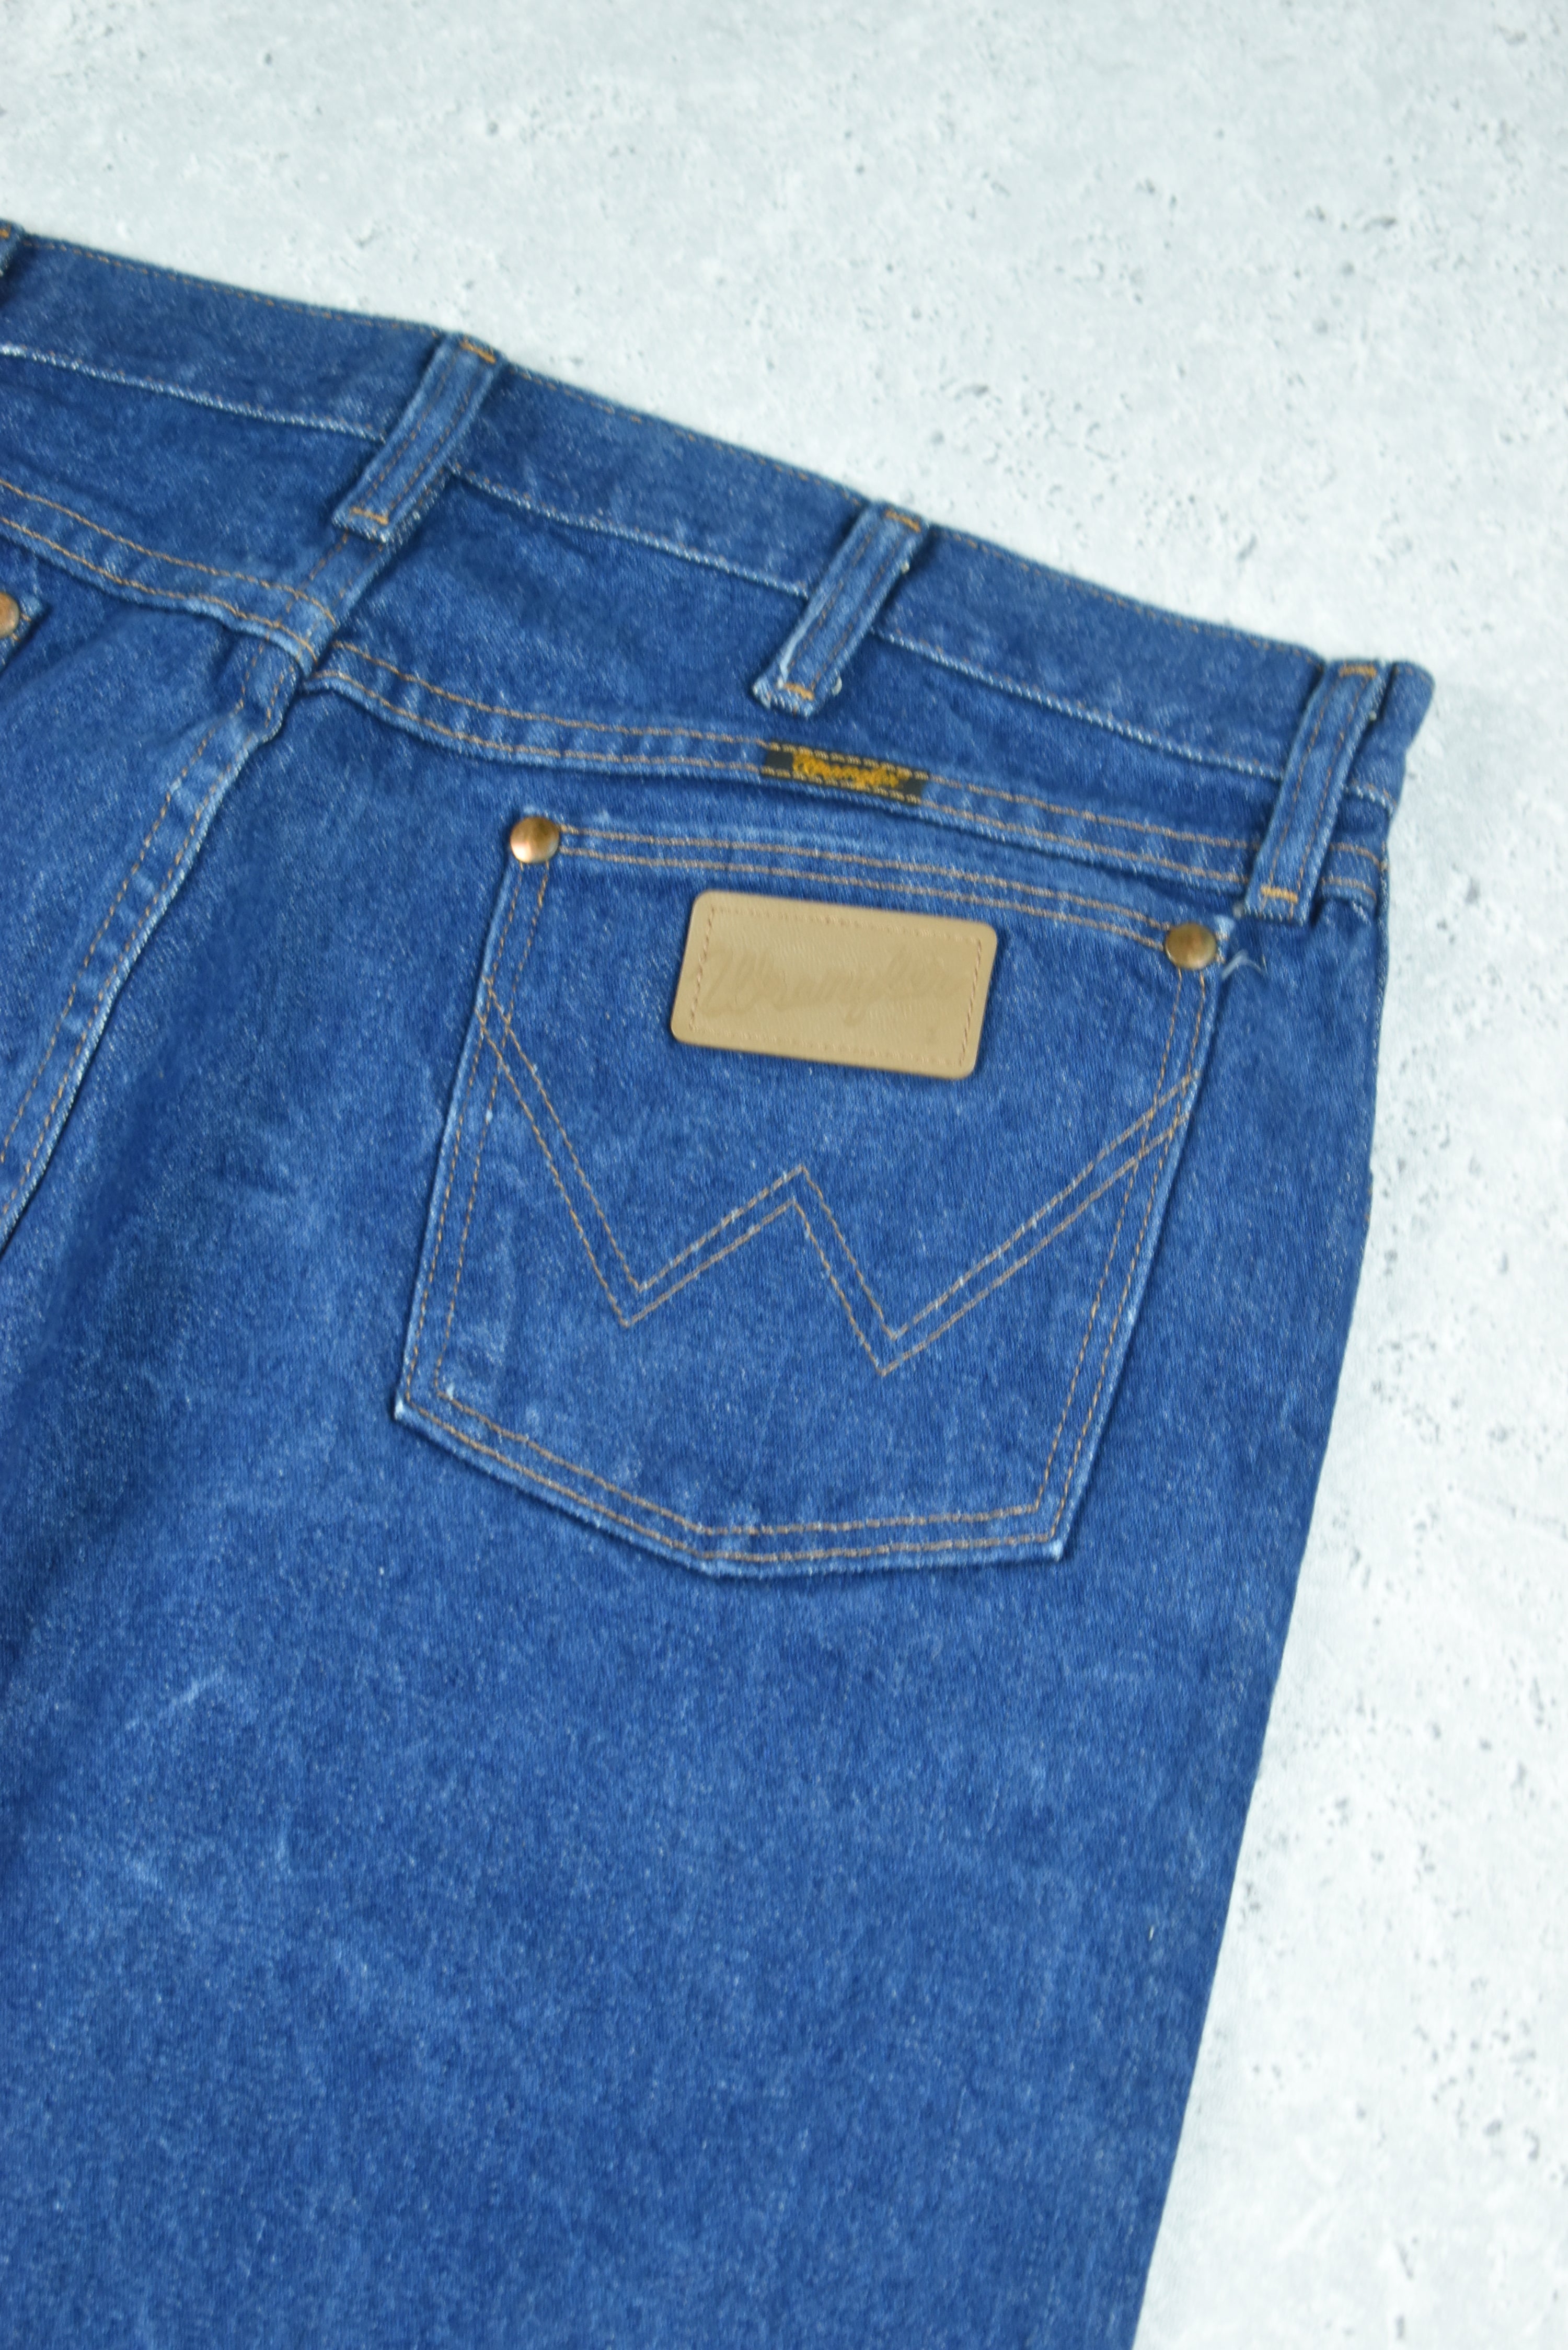 Vintage Wrangler Relaxed Fit Denim Jeans 35x34